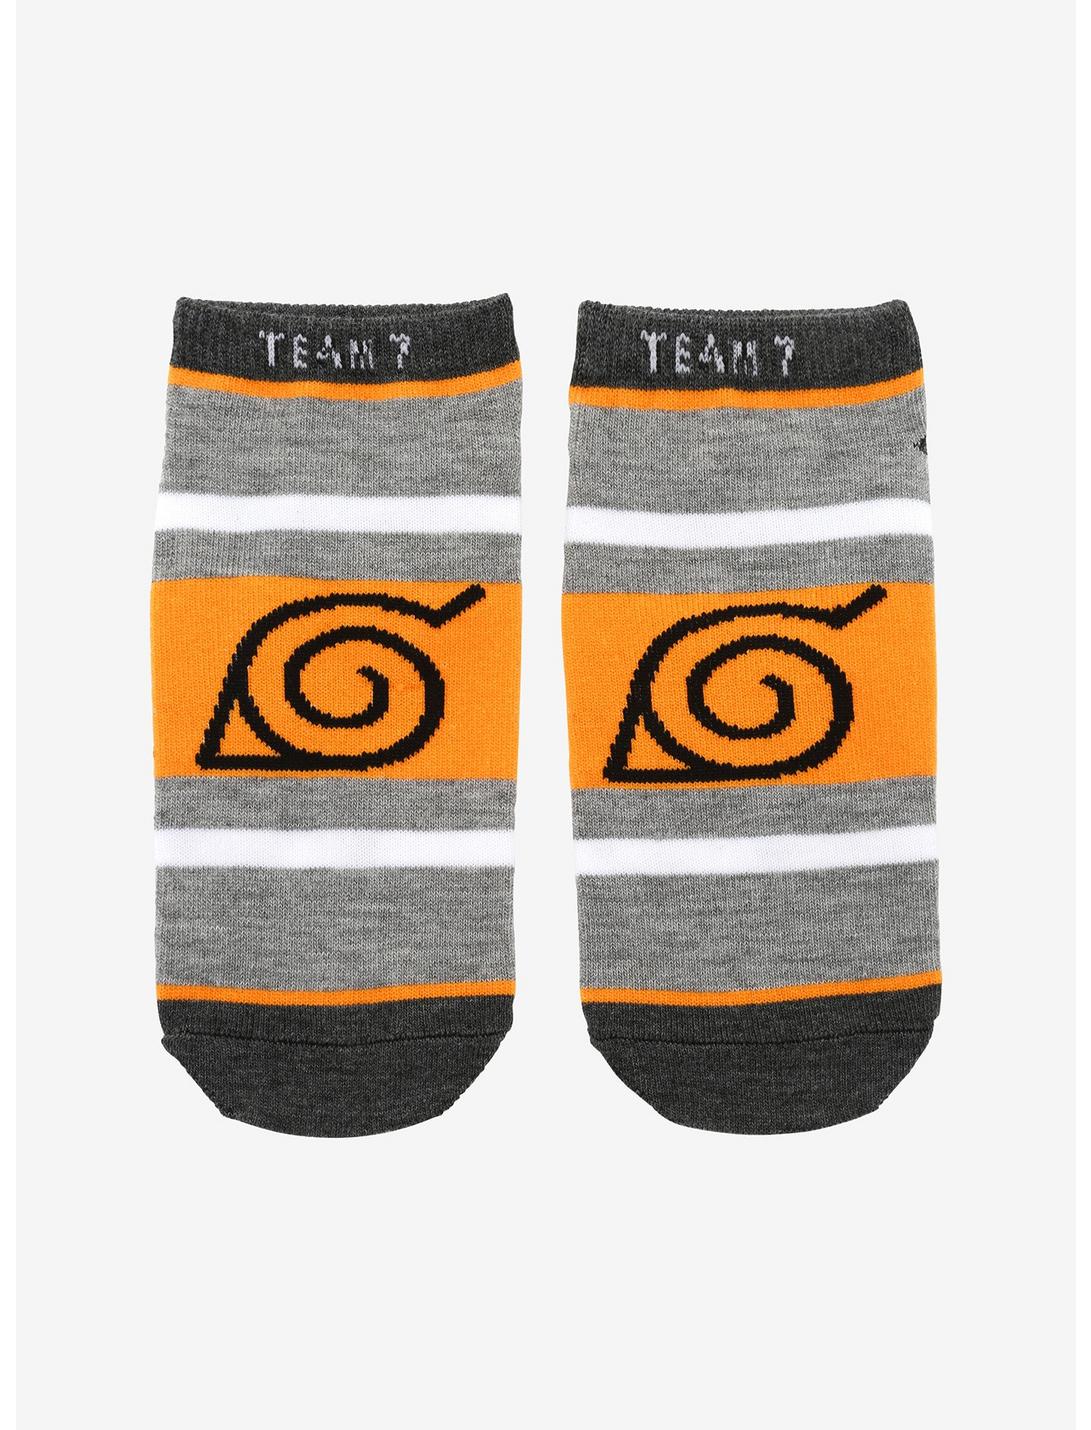 Naruto Shippuden Team 7 No-Show Socks, , hi-res